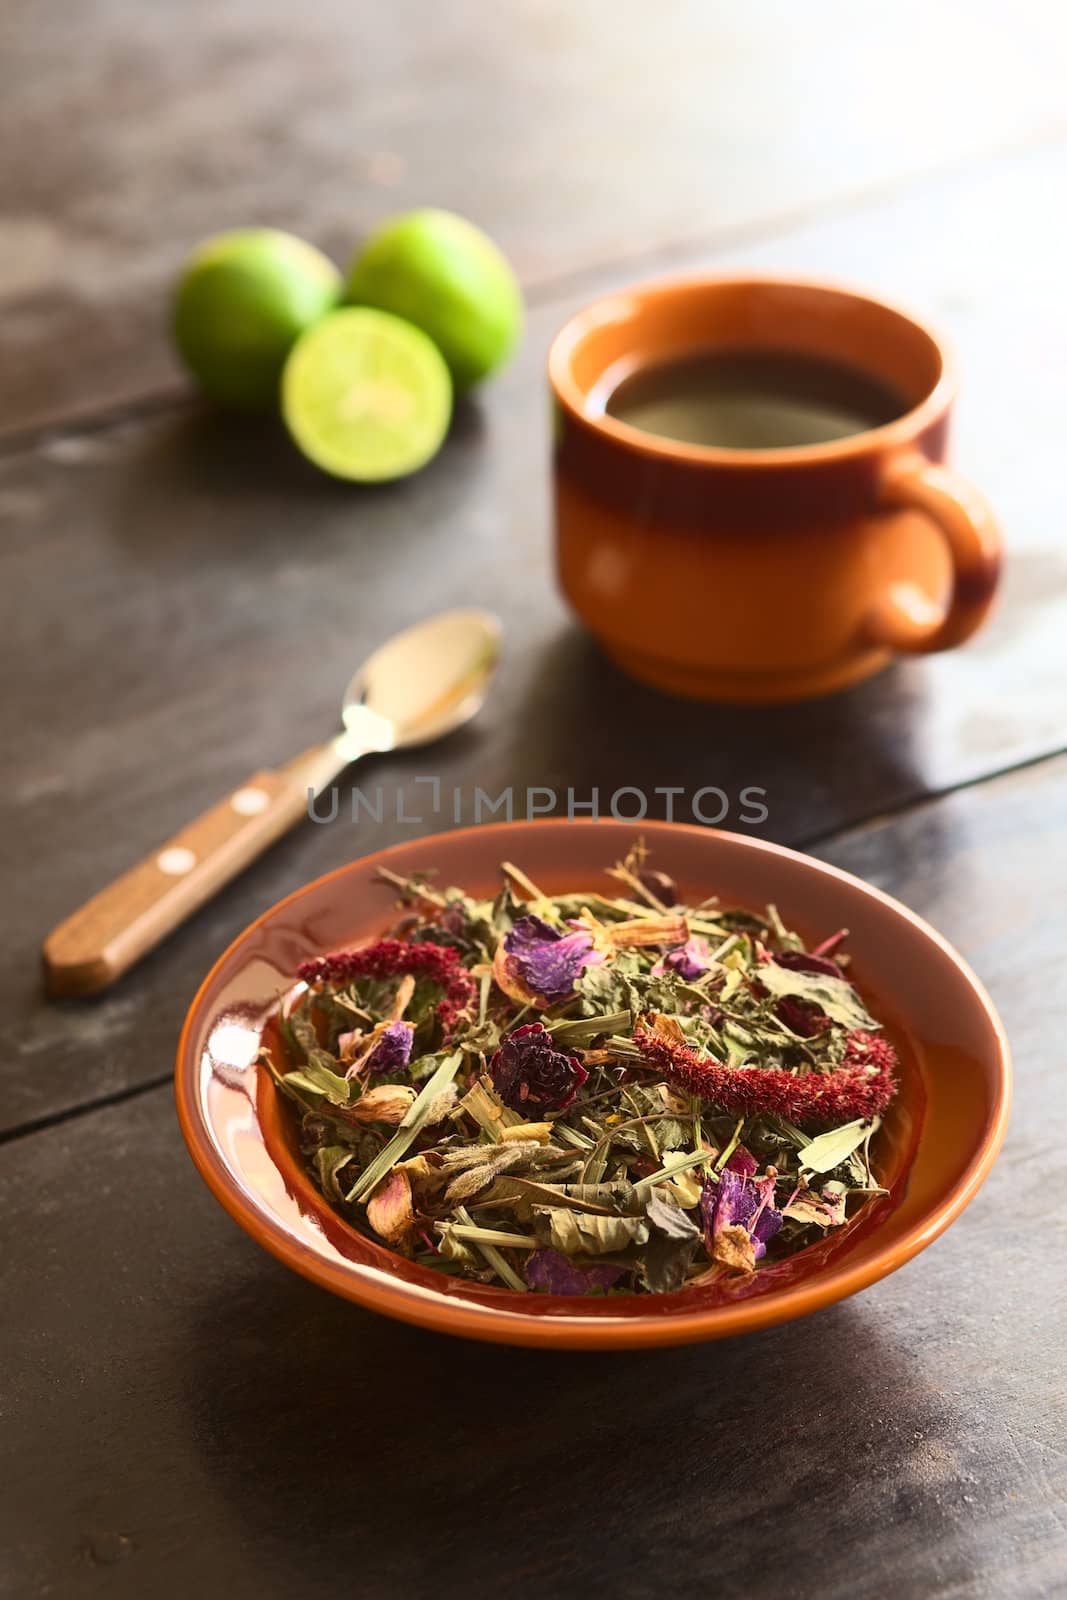 Ecuadorian Horchata Herbal Tea by ildi